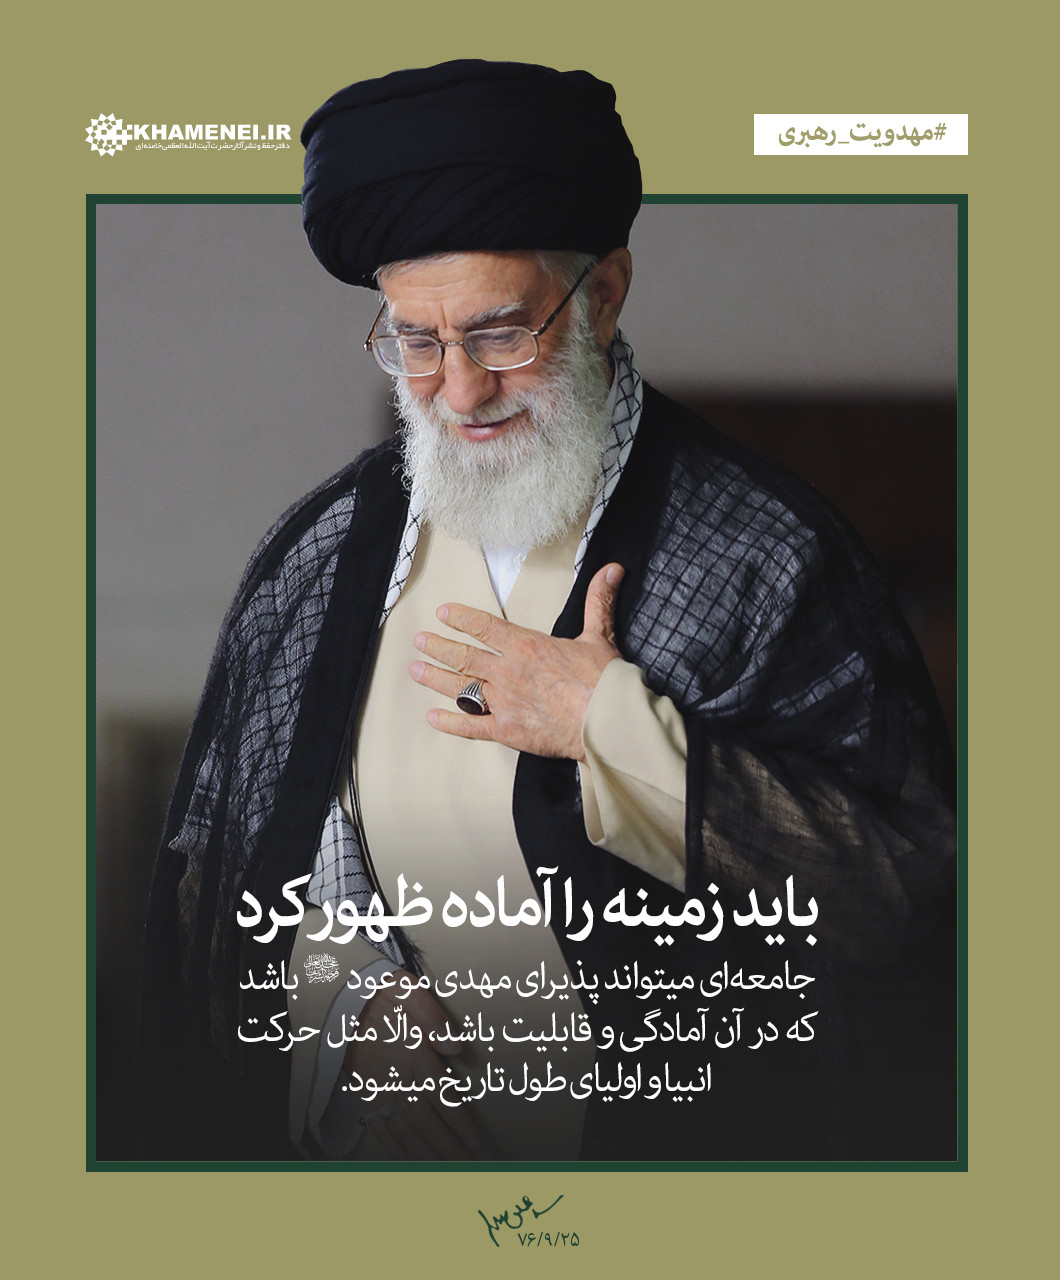 https://idc0-cdn0.khamenei.ir/ndata/news/34597/B/13950719_0434597.jpg